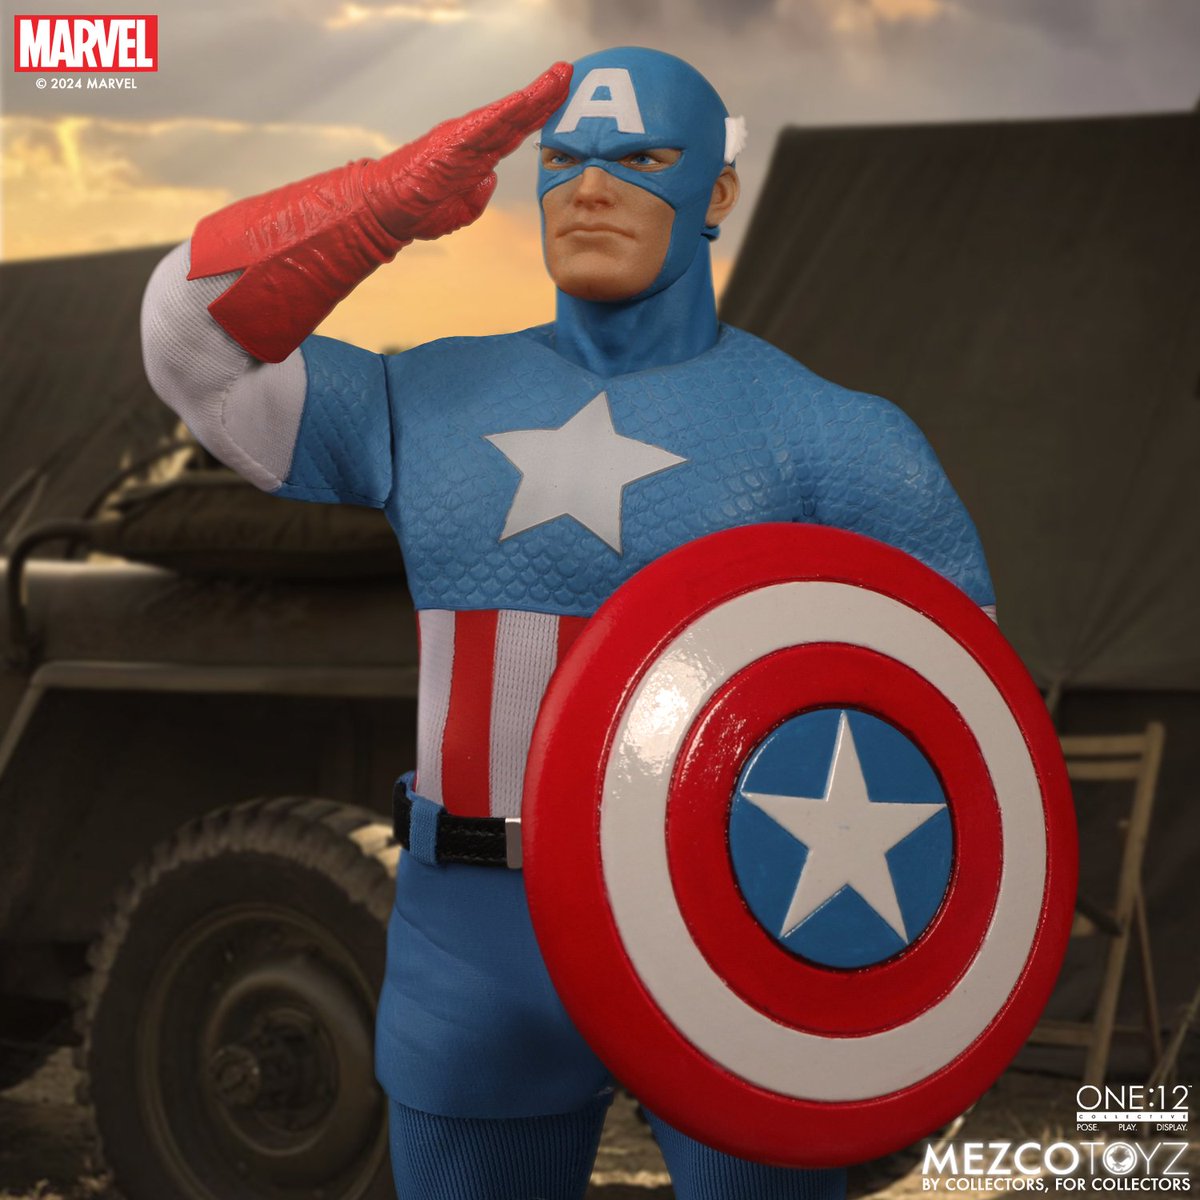 Silver Age Captain America One:12 Collective By Mezco toyark.com/2024/04/24/sil… #toyark #actionfigures